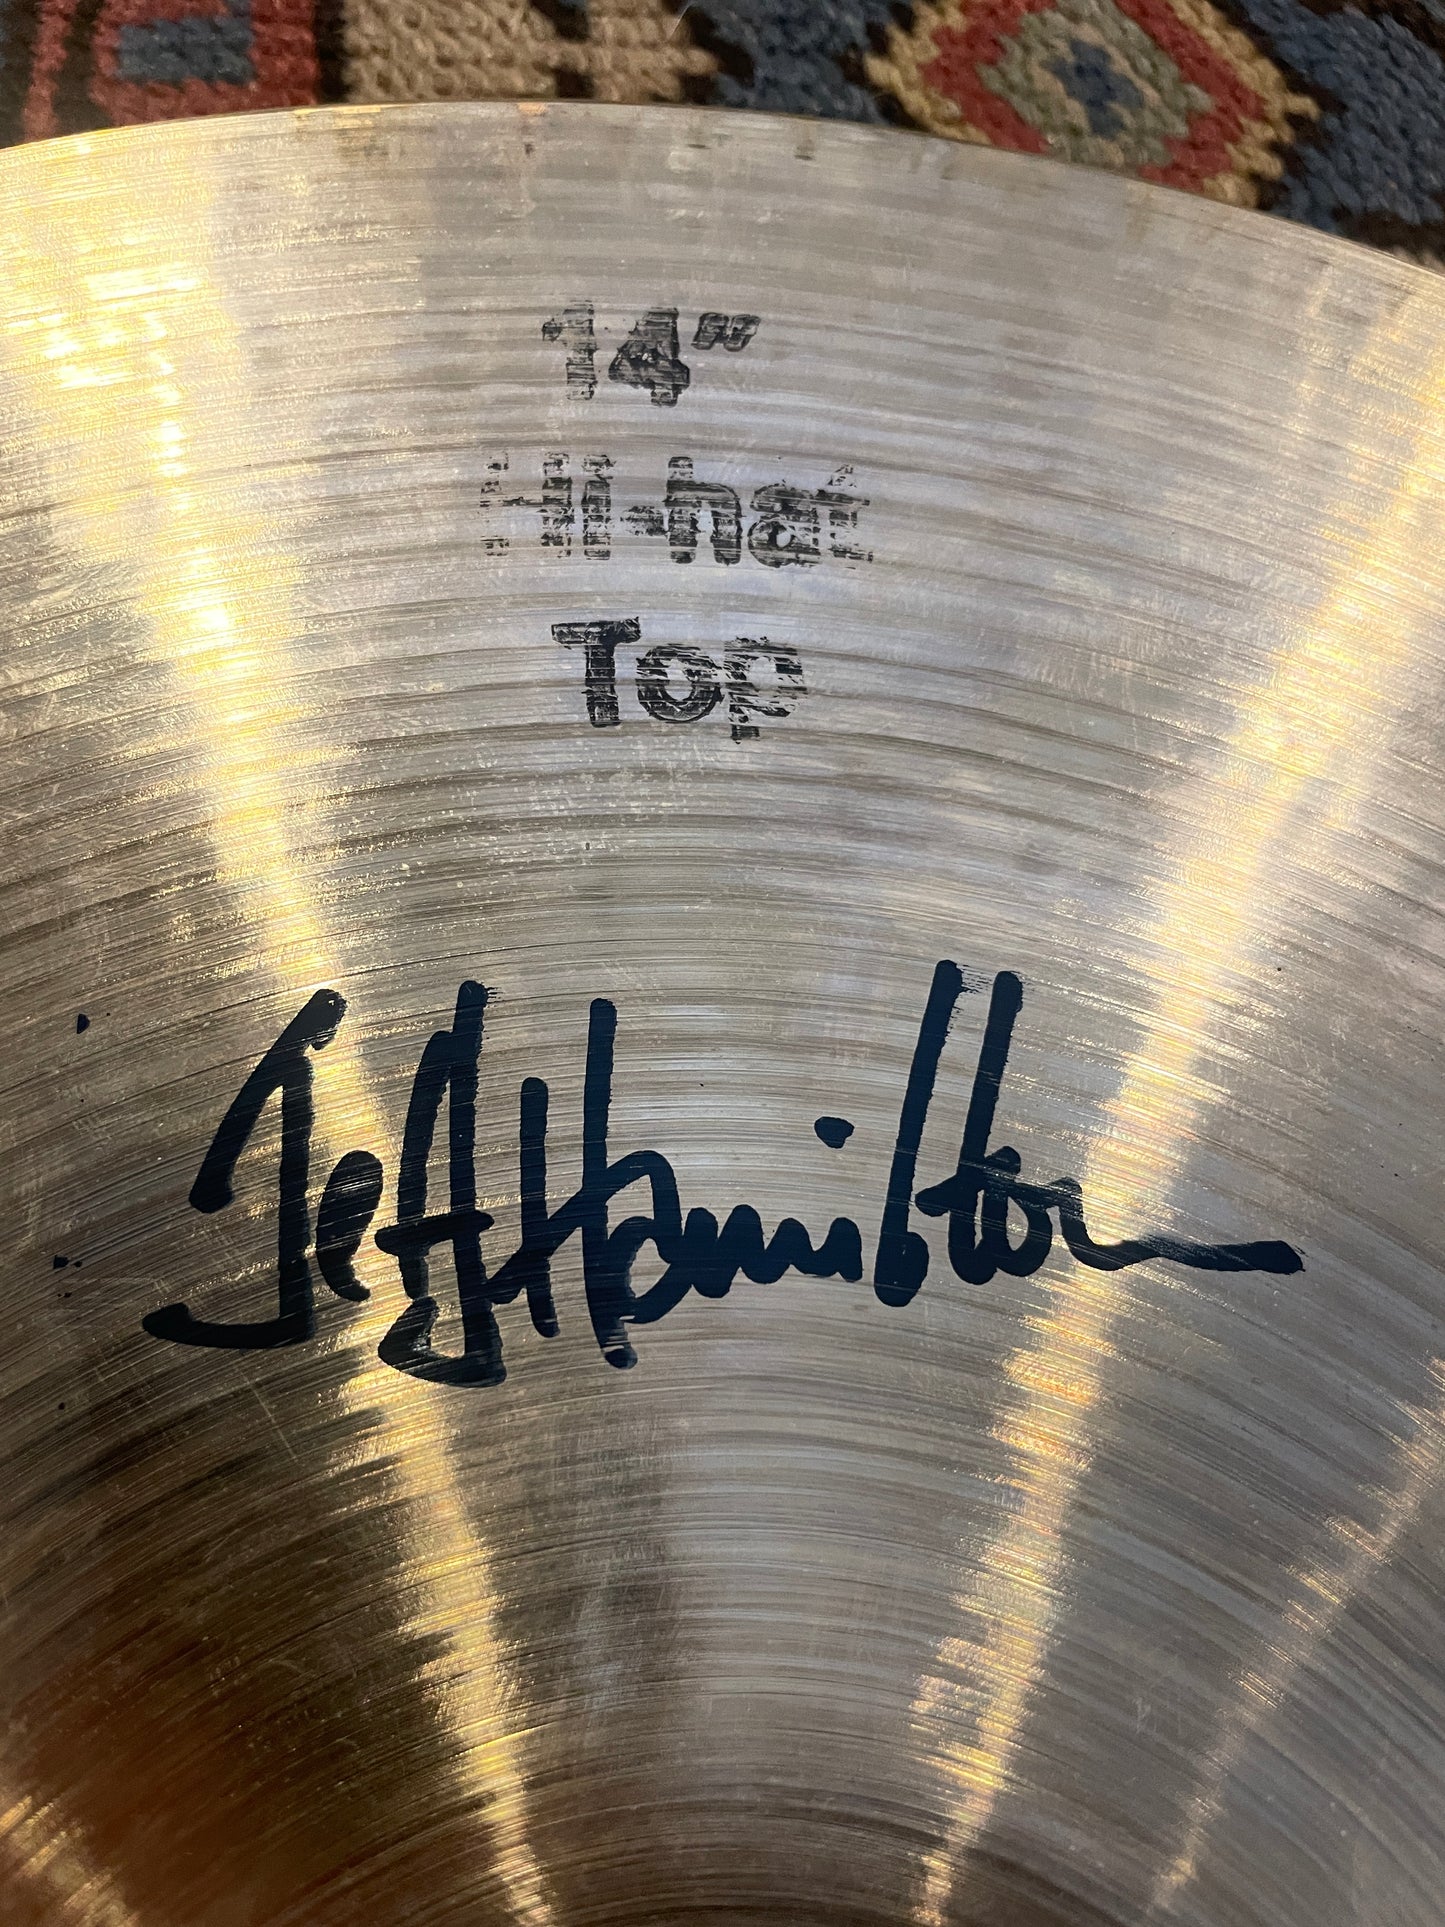 14" Bosphorus "The Hammer" Jeff Hamilton Signature Hi-Hat Cymbal Pair 840g/1254g *Video Demo*